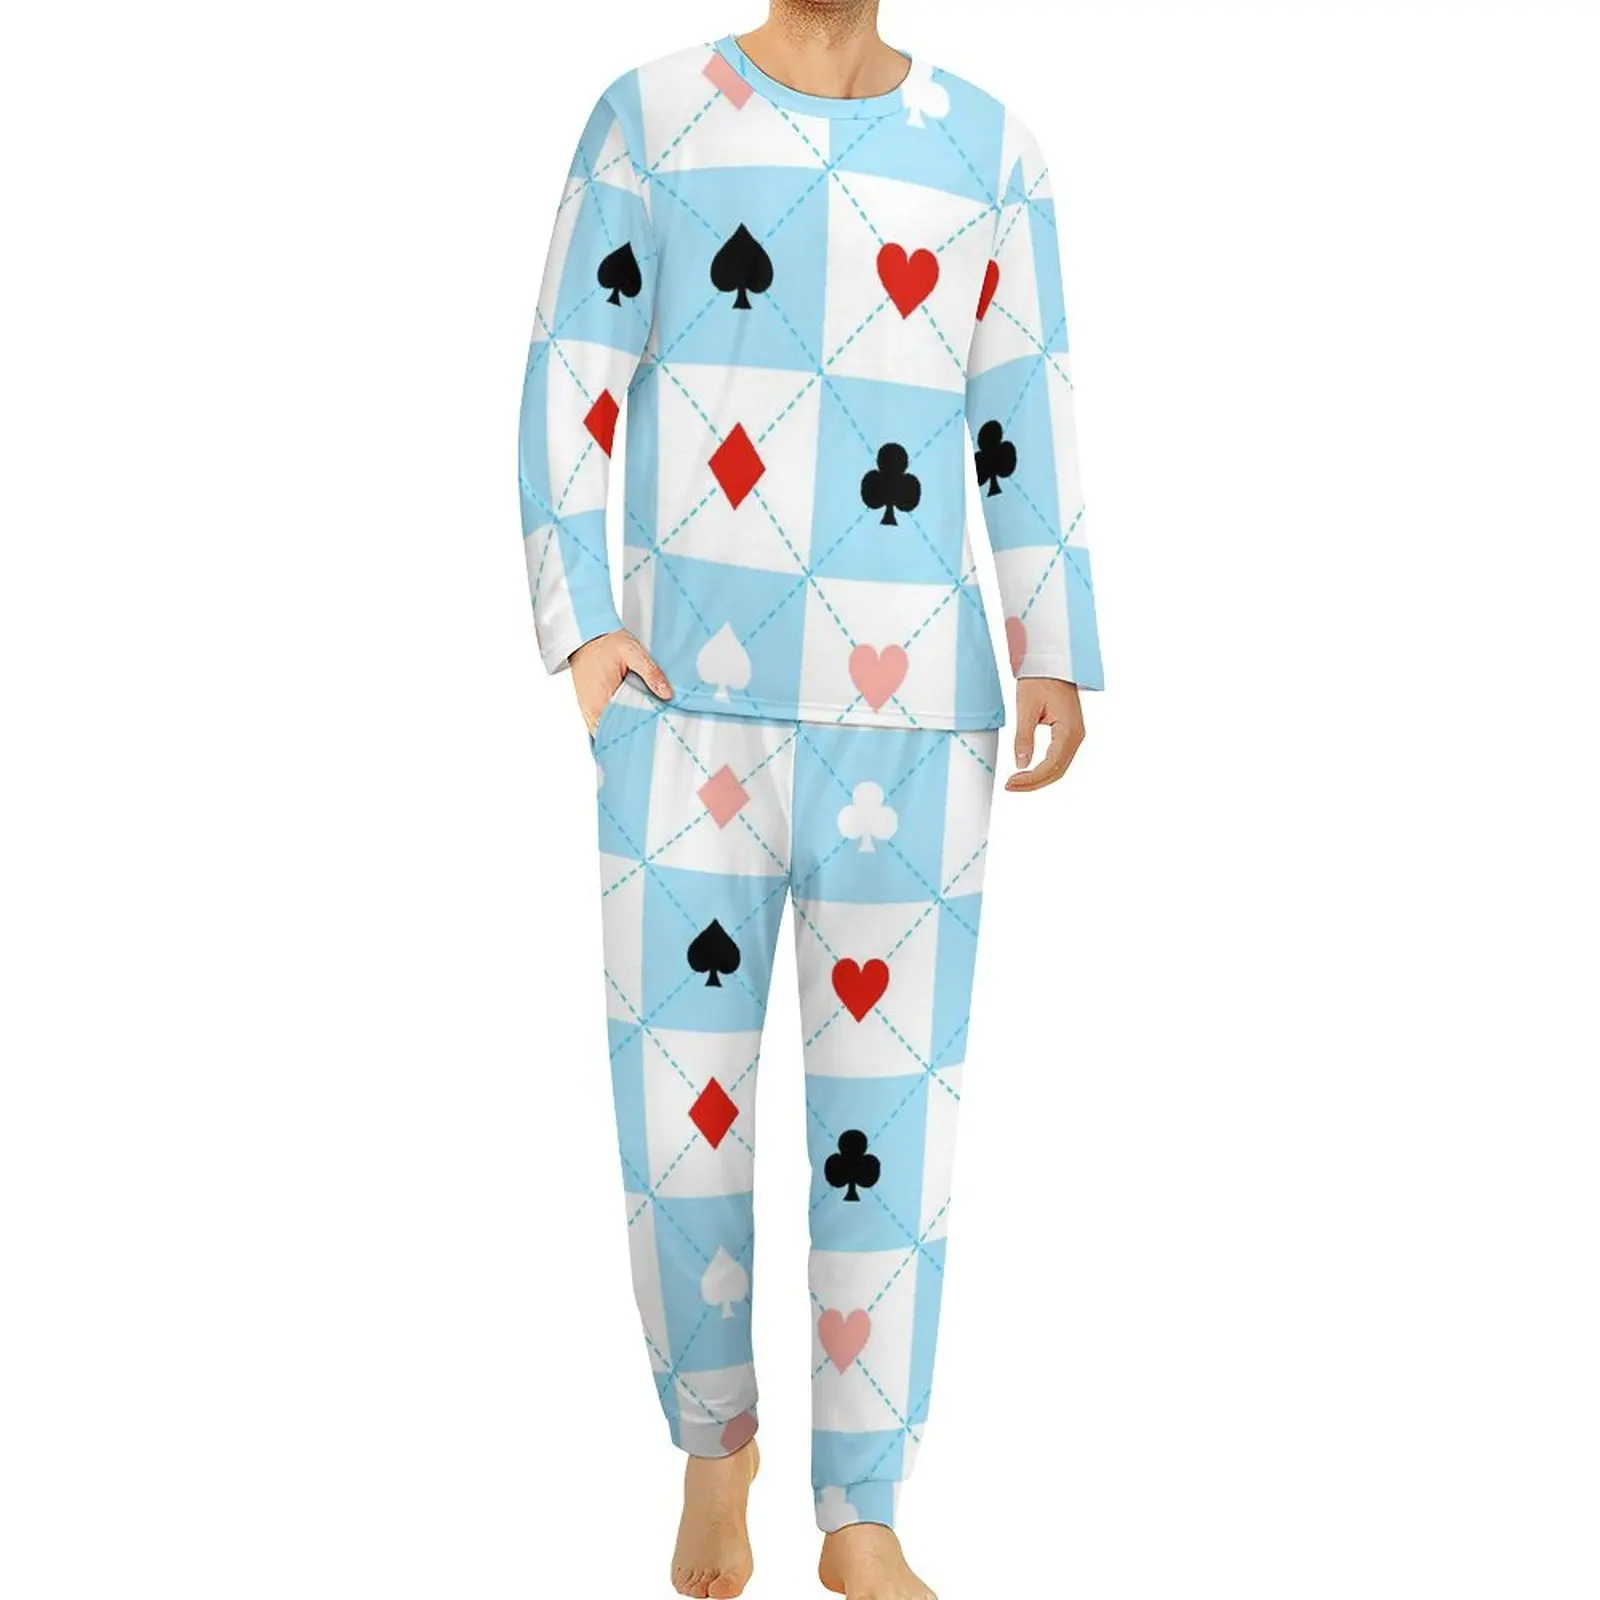 heart-poker-pijama-diario-duas-pecas-azul-e-branco-xadrez-adoravel-conjuntos-de-pijama-homens-manga-longa-home-graphic-sleepwear-tamanho-grande